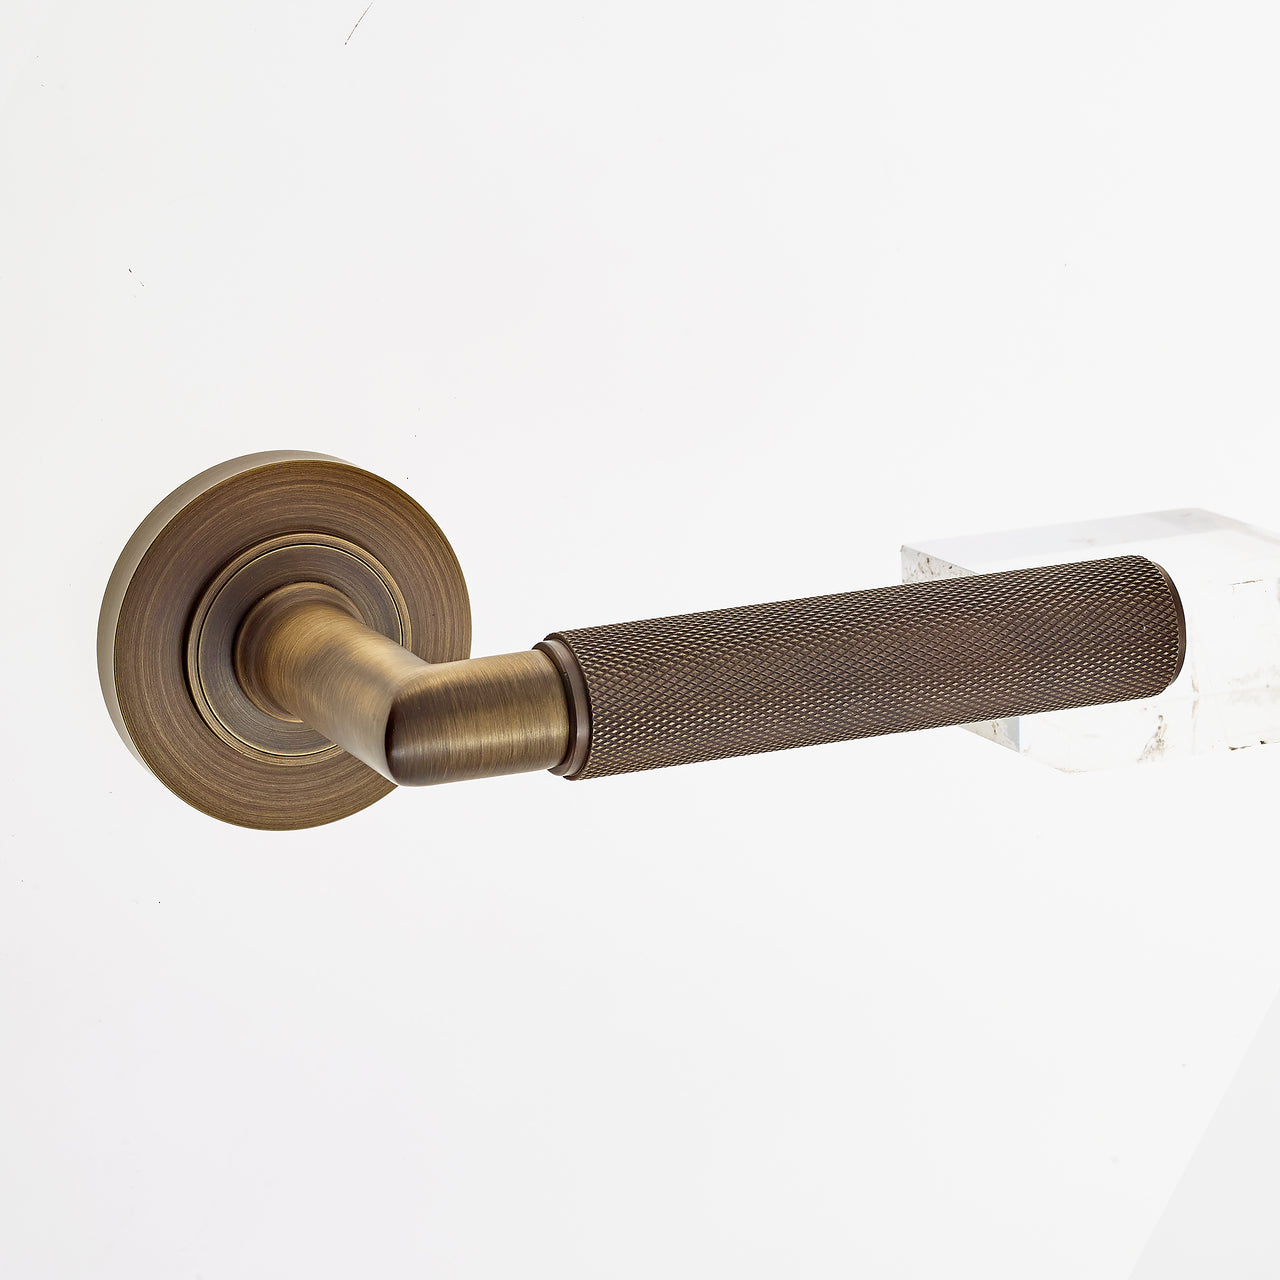 Piccadilly Knurled Antique Brass Door Handles - Frelan Hardware Burlington Range - Antique Brass/Bronze - BUR40/50AB PLAIN ROSE